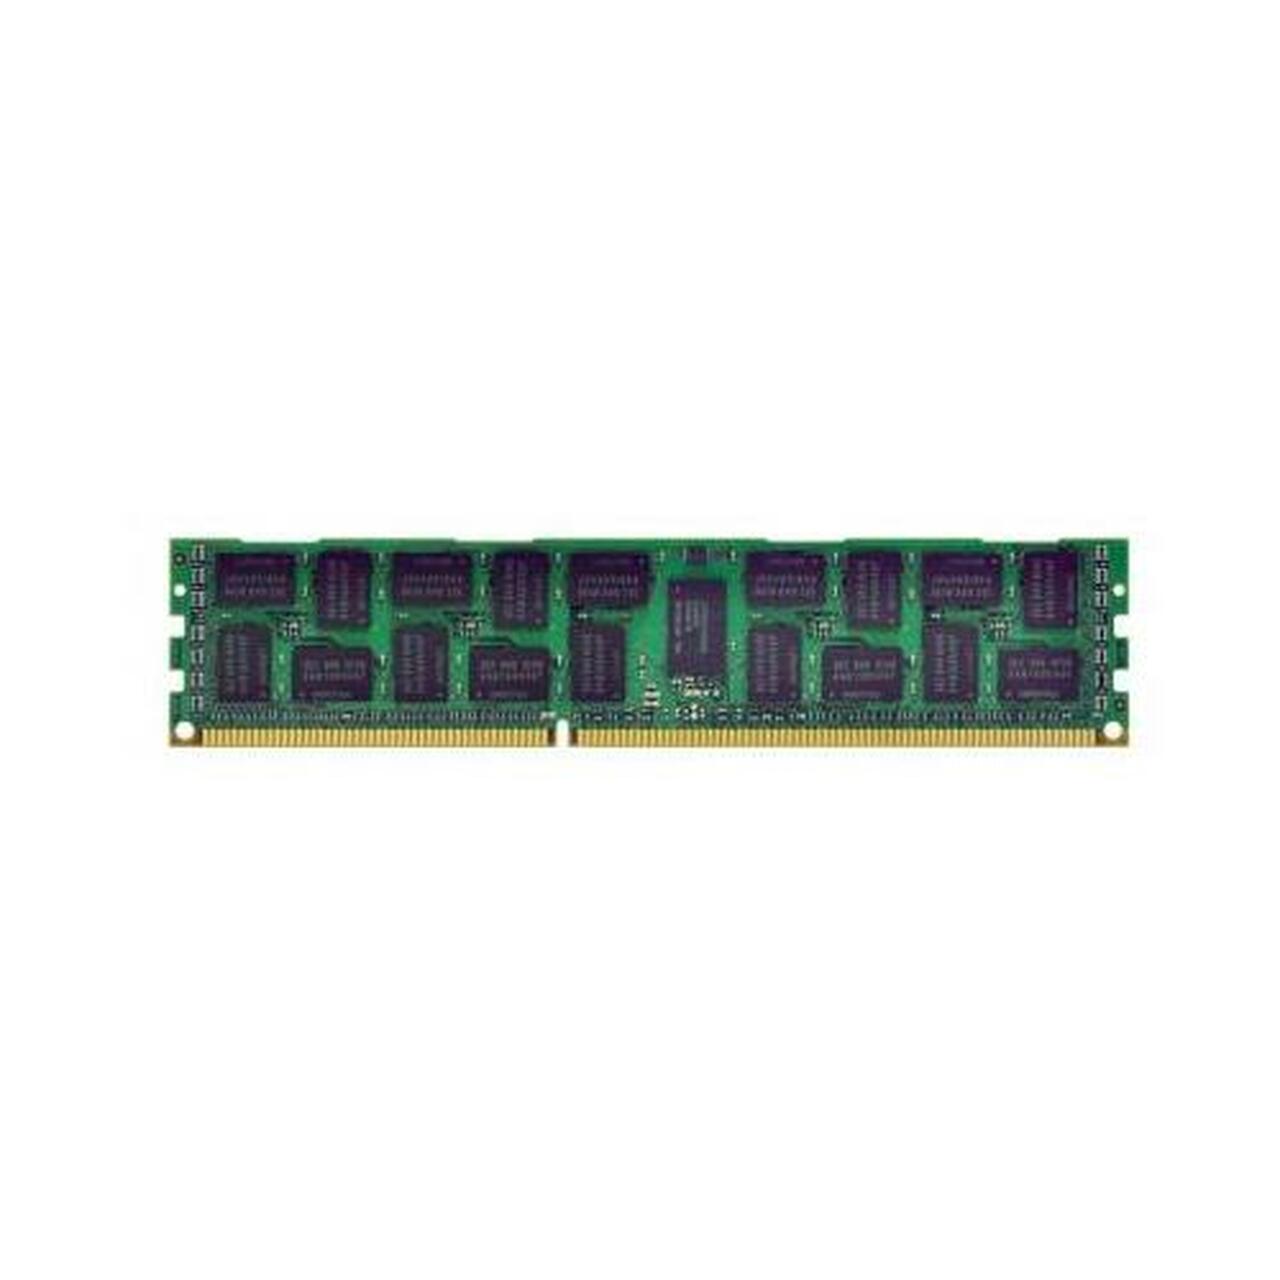 K000085830 | Toshiba 1GB DDR3 Registered ECC PC3-8500 1066Mhz 1Rx8 Memory